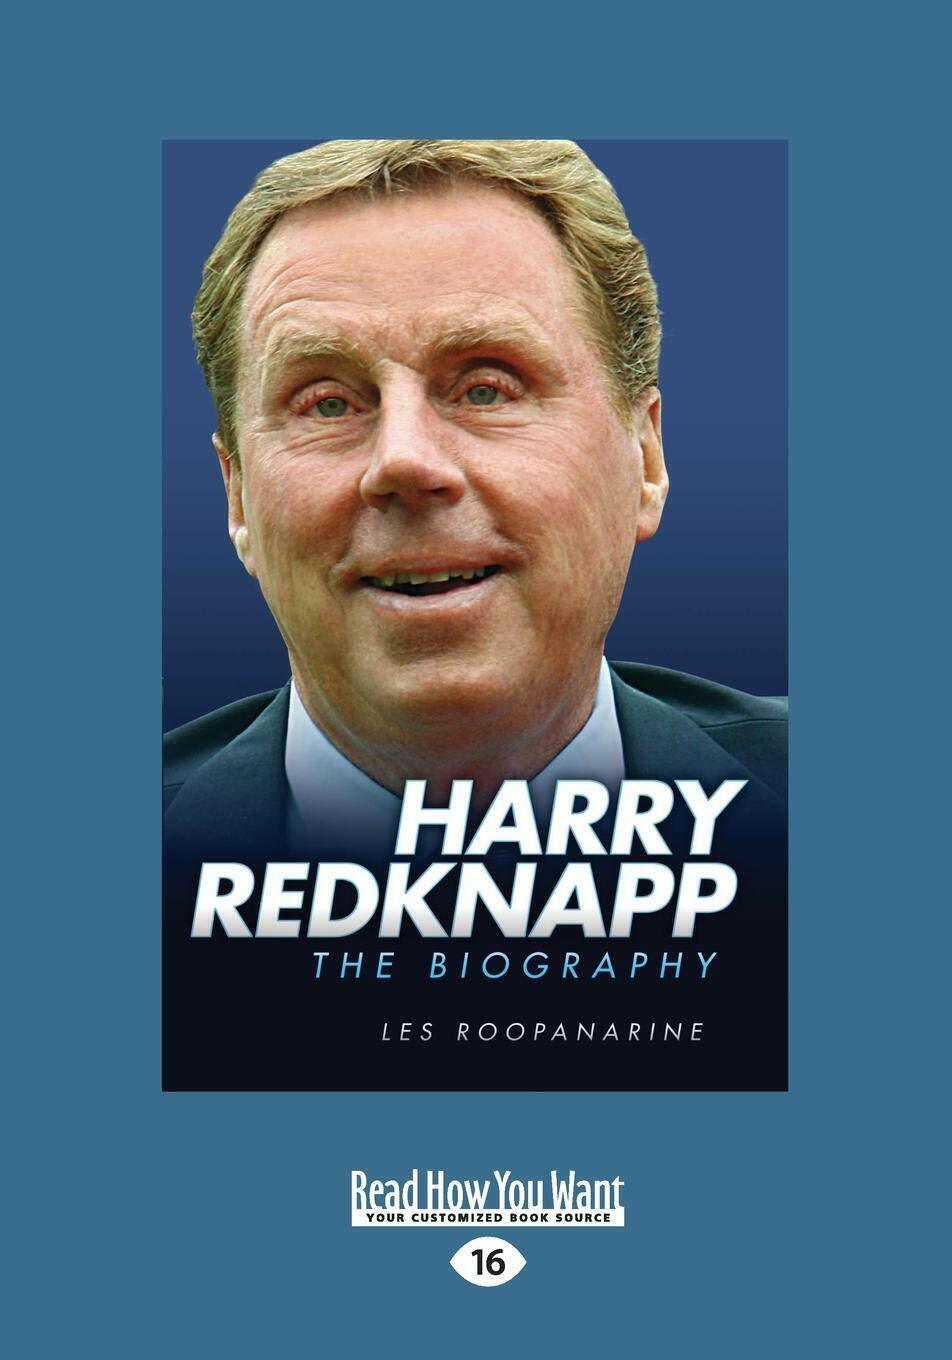 Harry Redknapp: The Biography - Les Roopanarine - Readhowyouwant.com - 2014